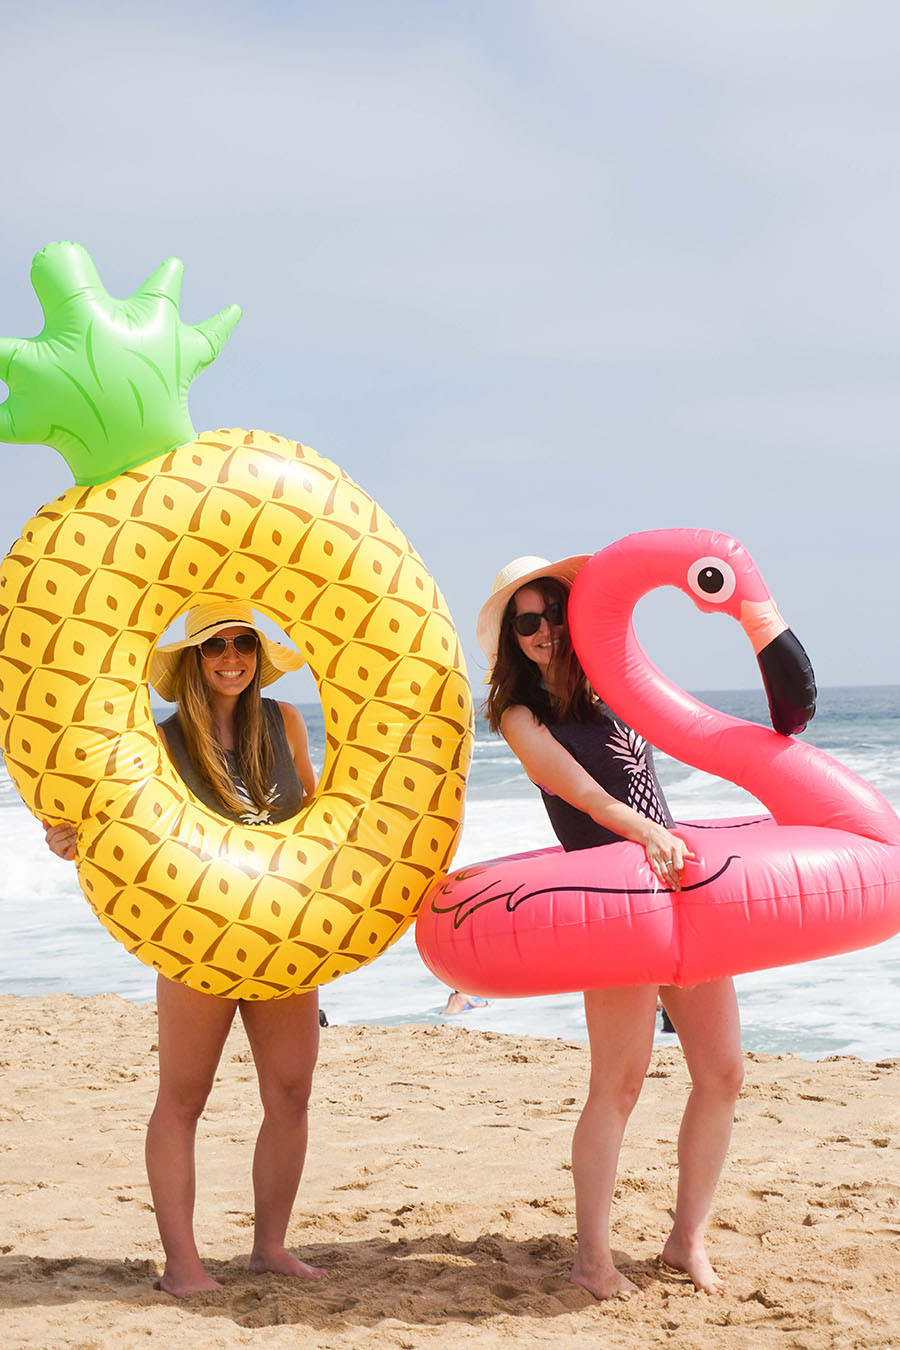 Bachelorette Beach Party Ideas
 A Tropical Beach Bachelorette Party